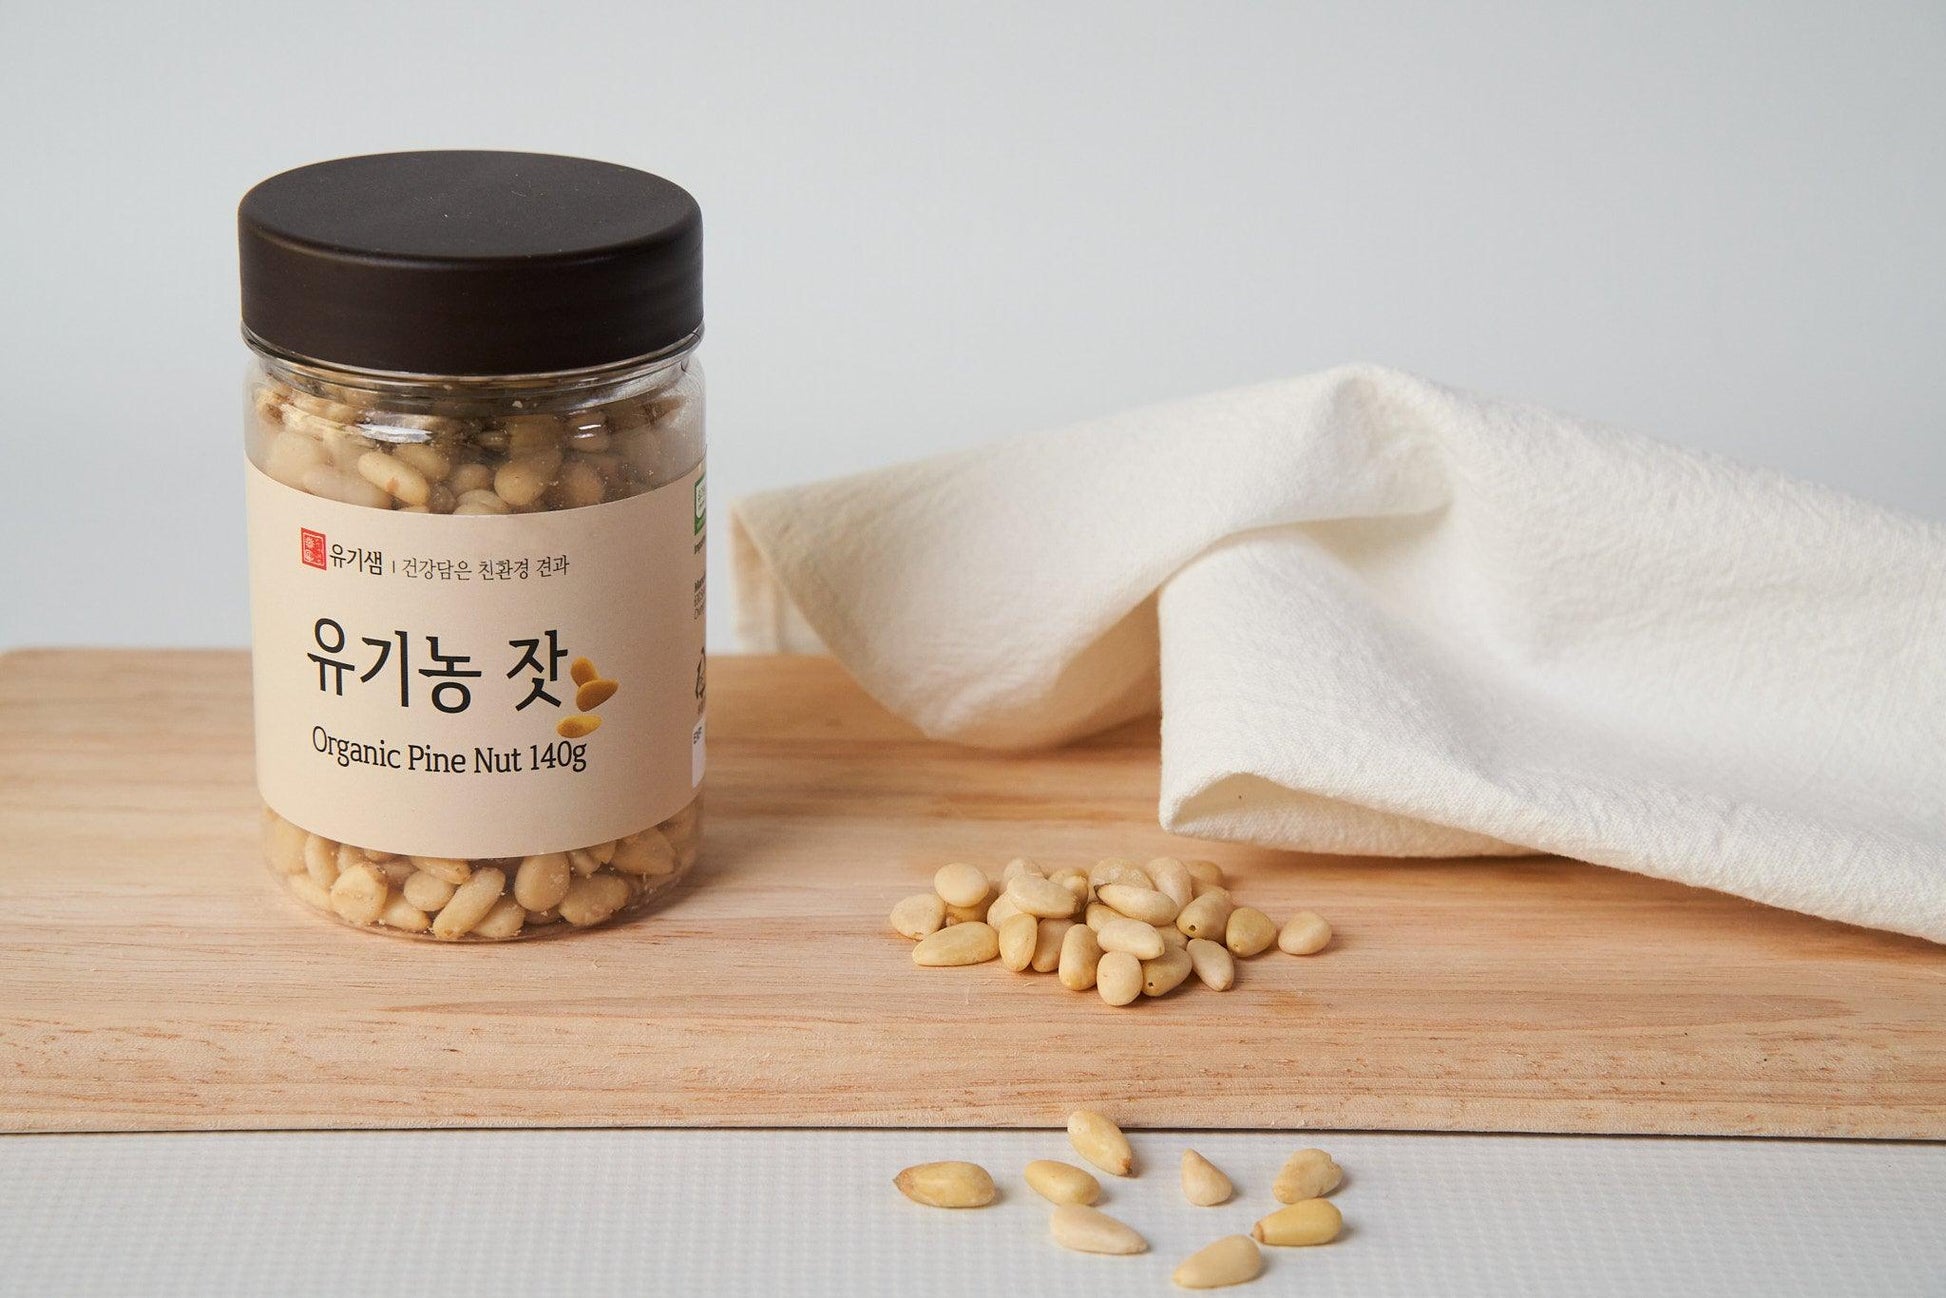 Organic Korean Pine Nuts (140g) - Kim'C Market